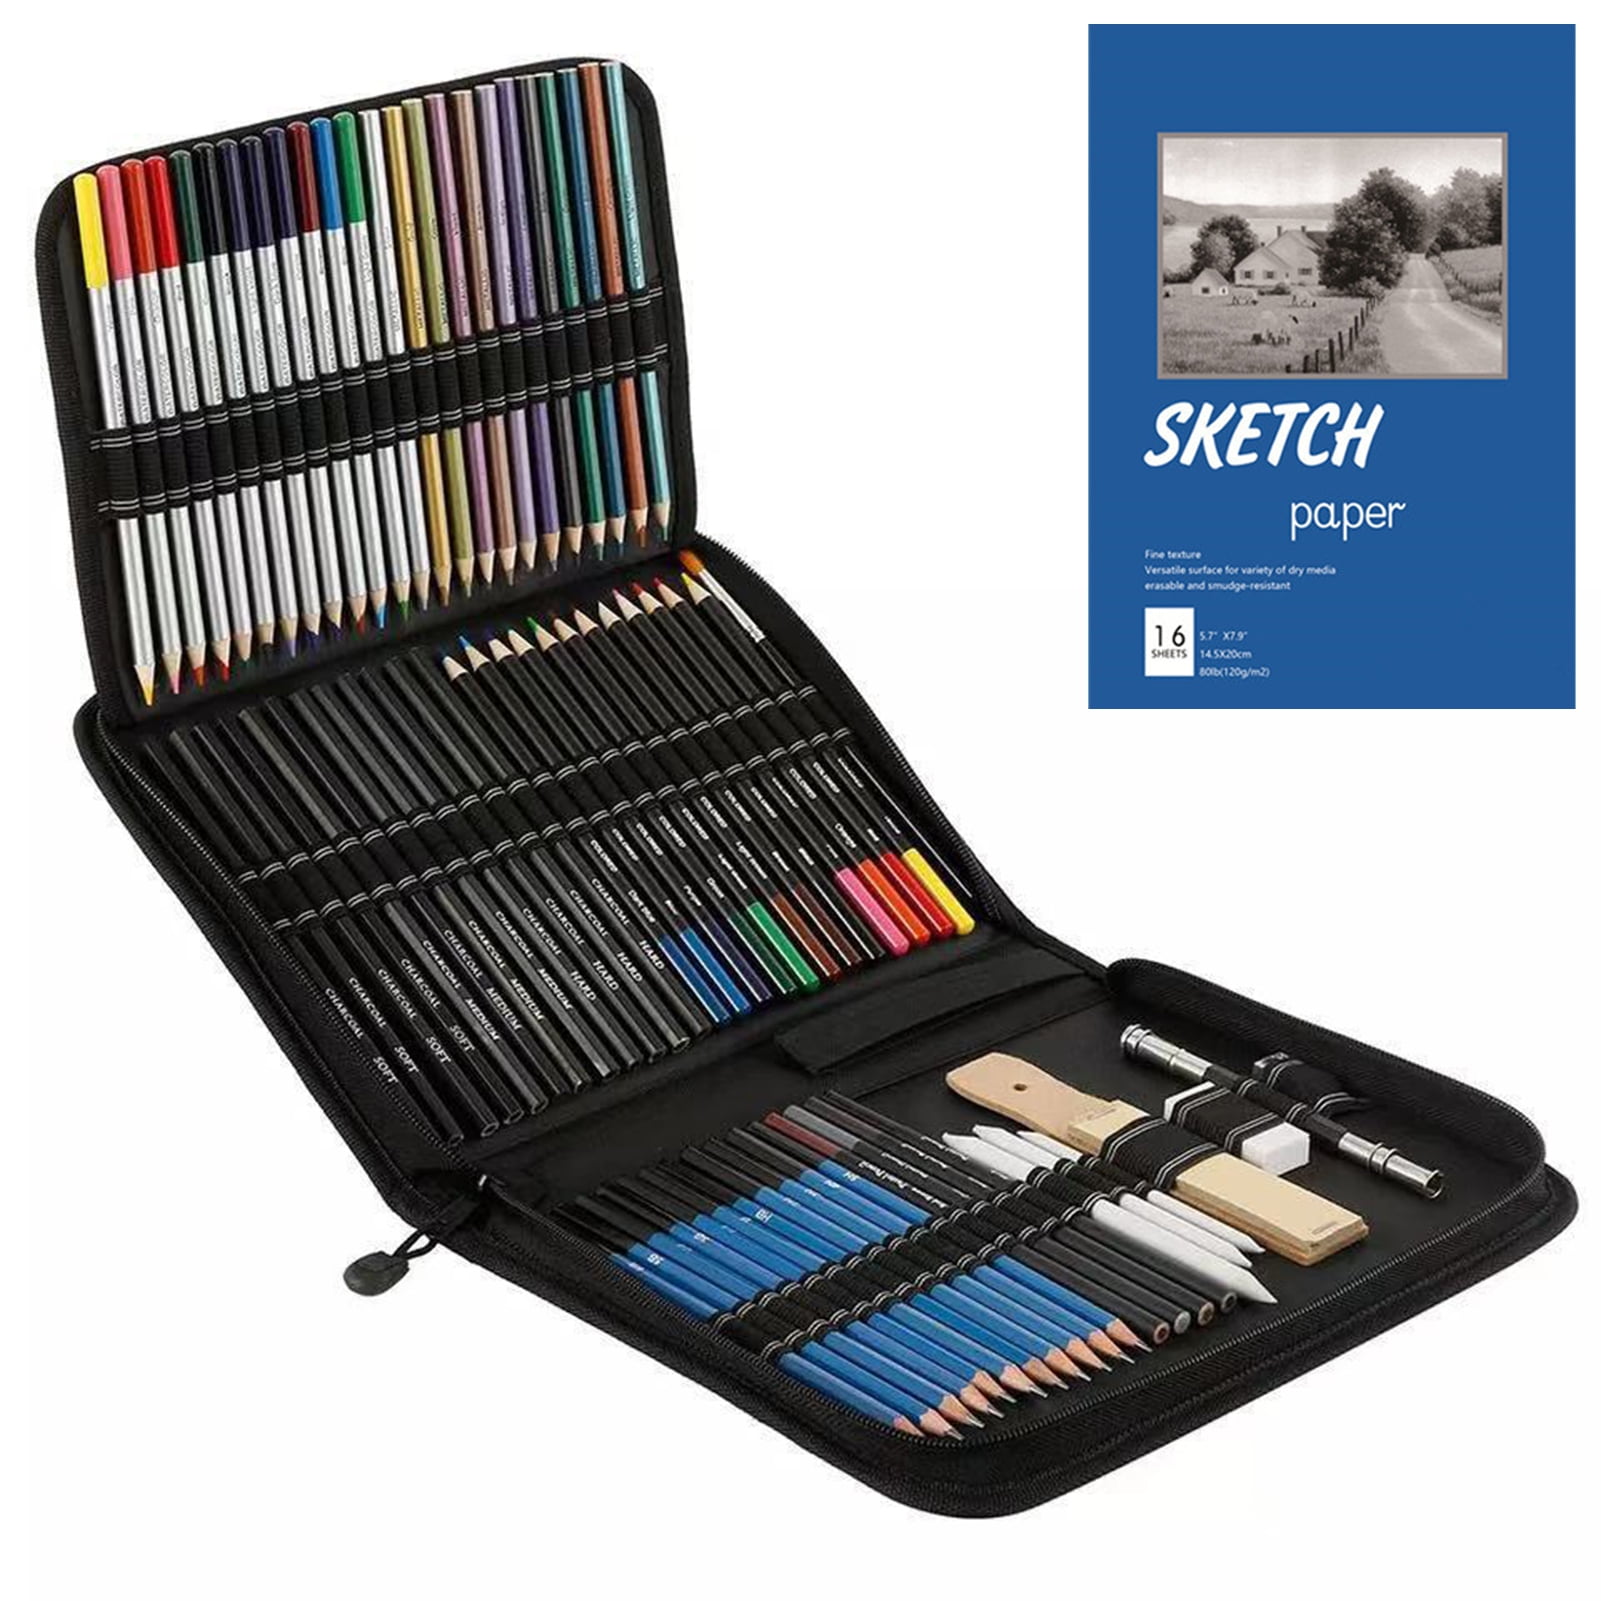 74-Piece Drawing Set - Beginner or Professional Tool Set, Pencil